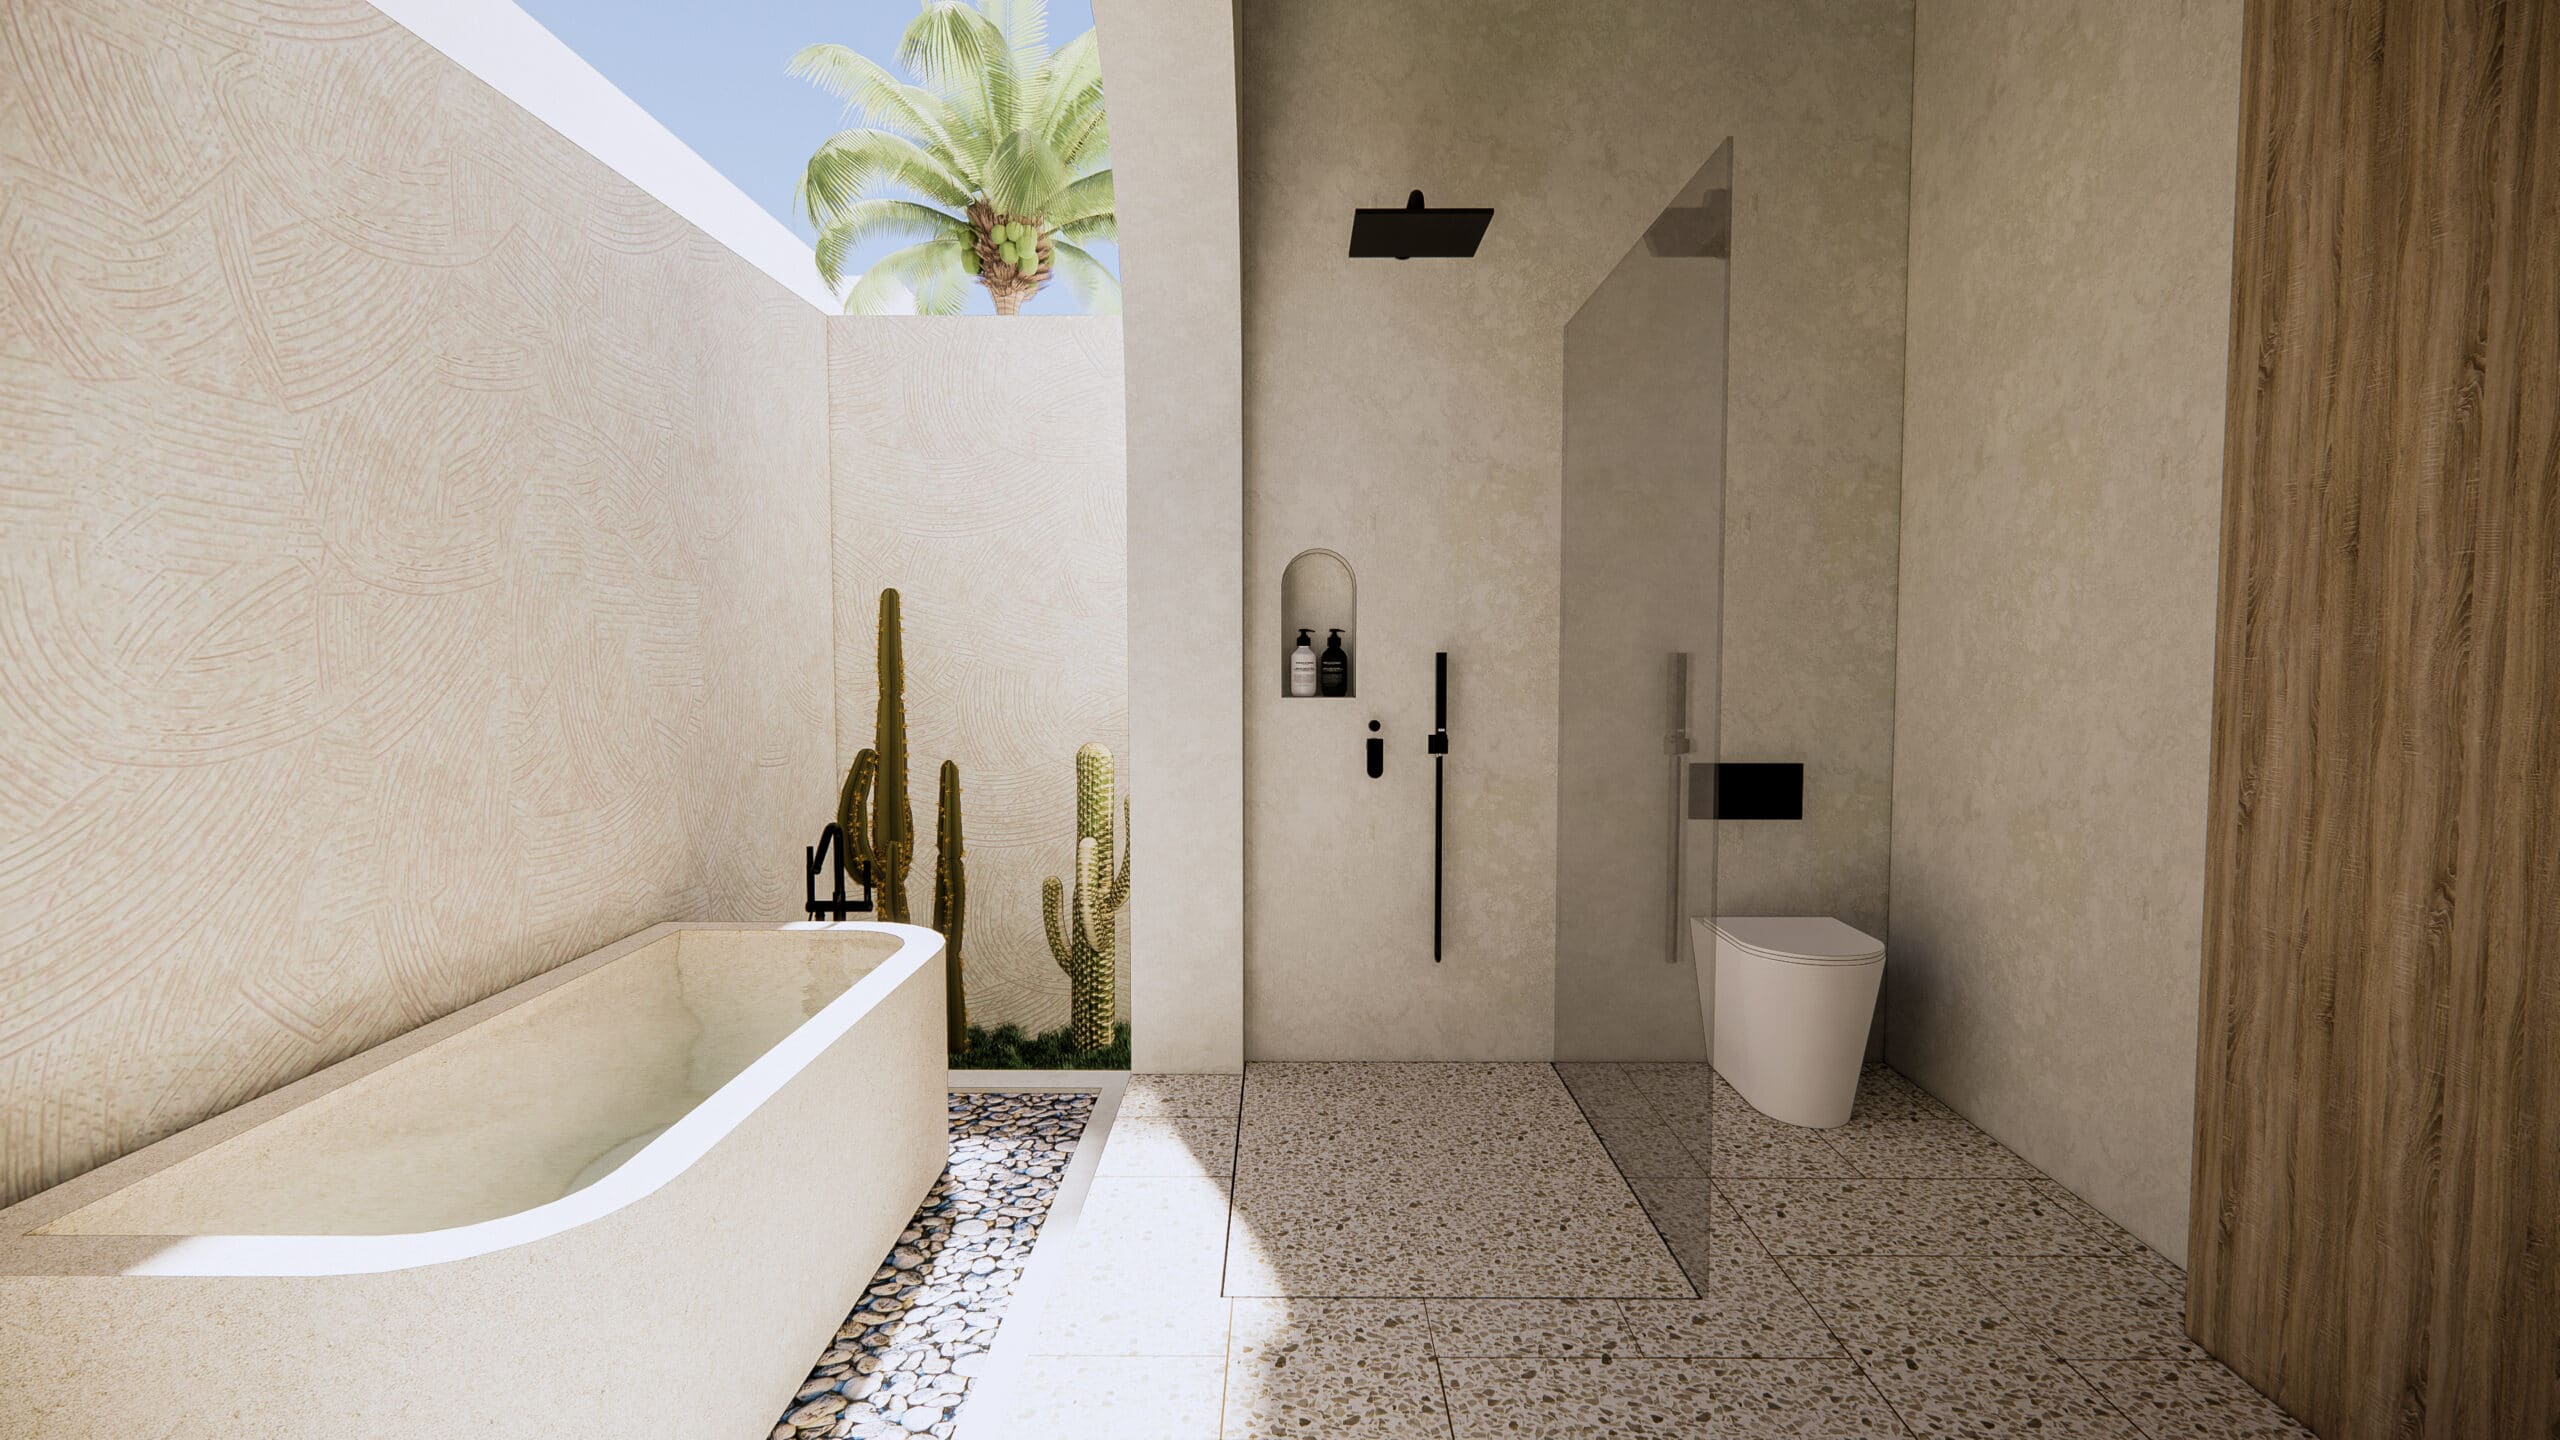 Design Assembly - Michael Utomo Villa - Bali Architect - Interior Design - Bali Villa - Bathroom - Outside Bathtub - Wall Facade